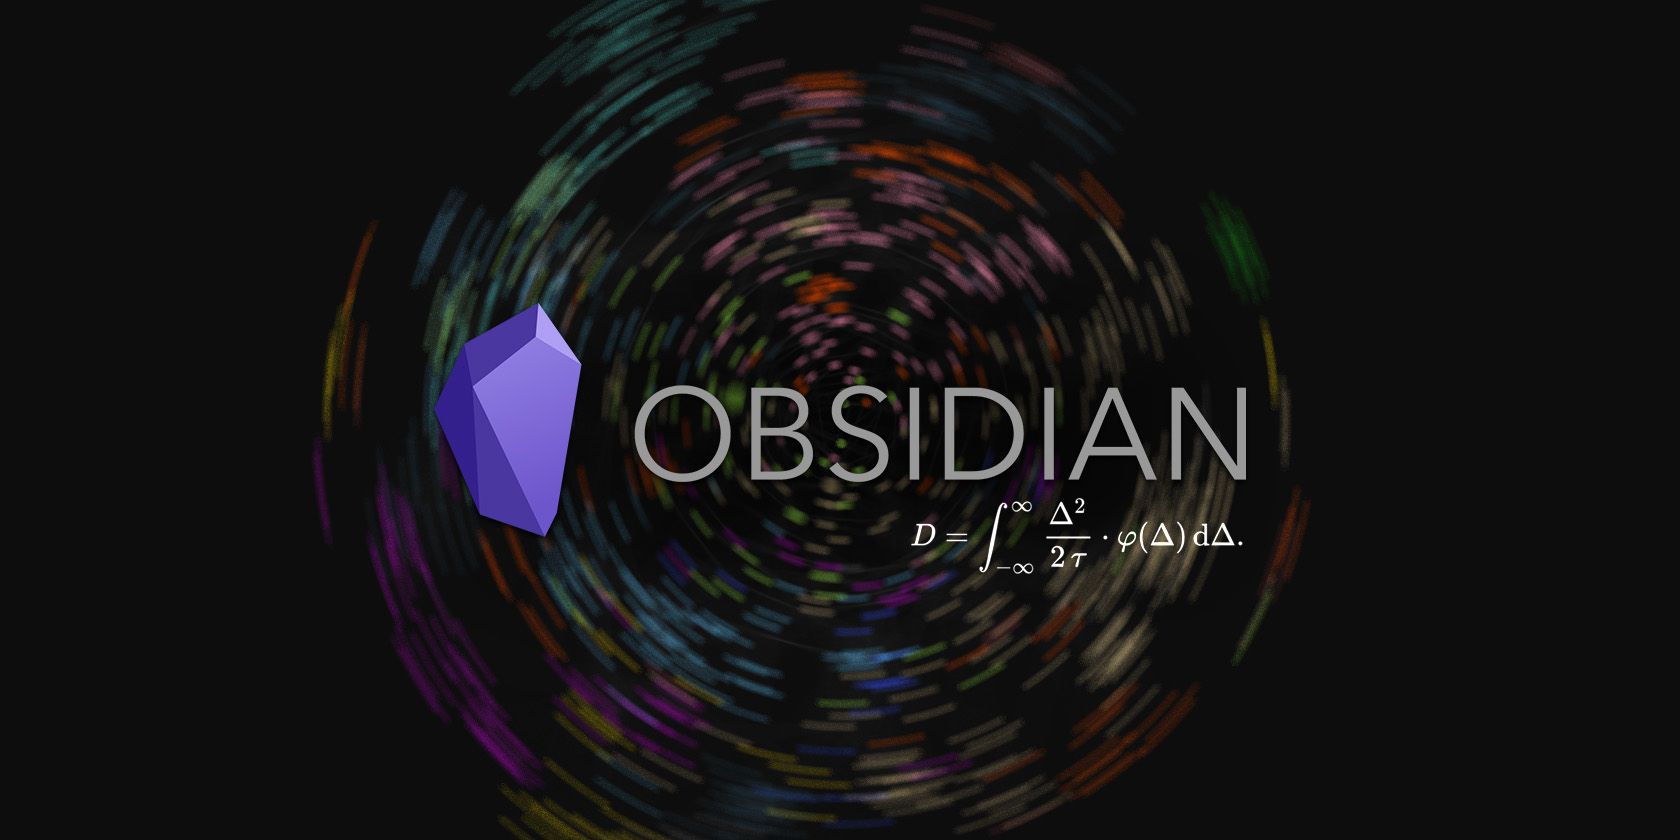 Obsidian logo with a math notation underneath